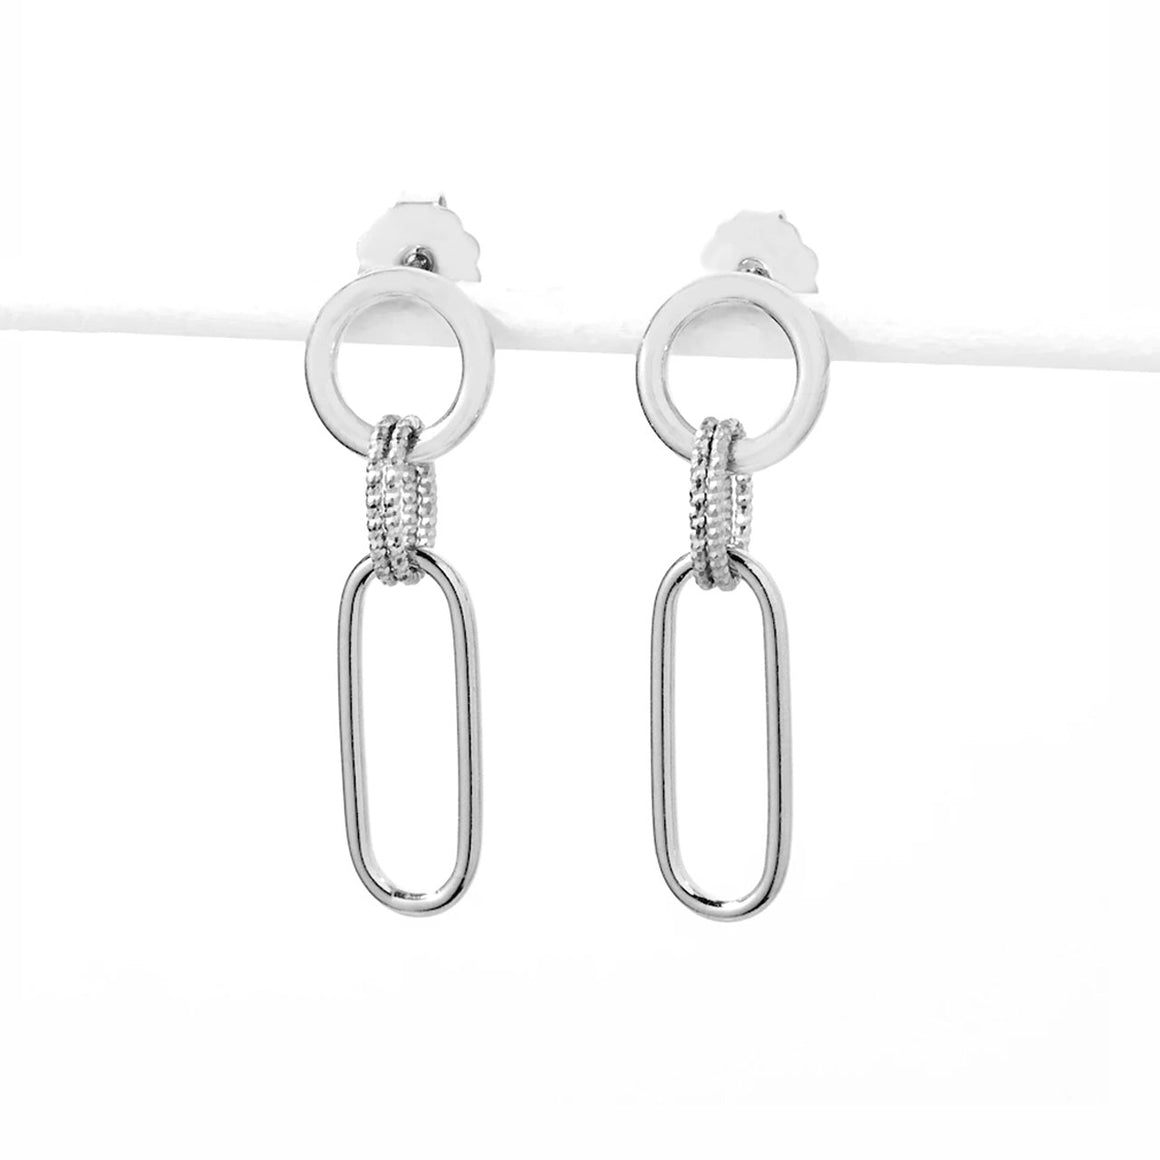 Sterling Silver Hoop Earrings with Diamond Cut Texture